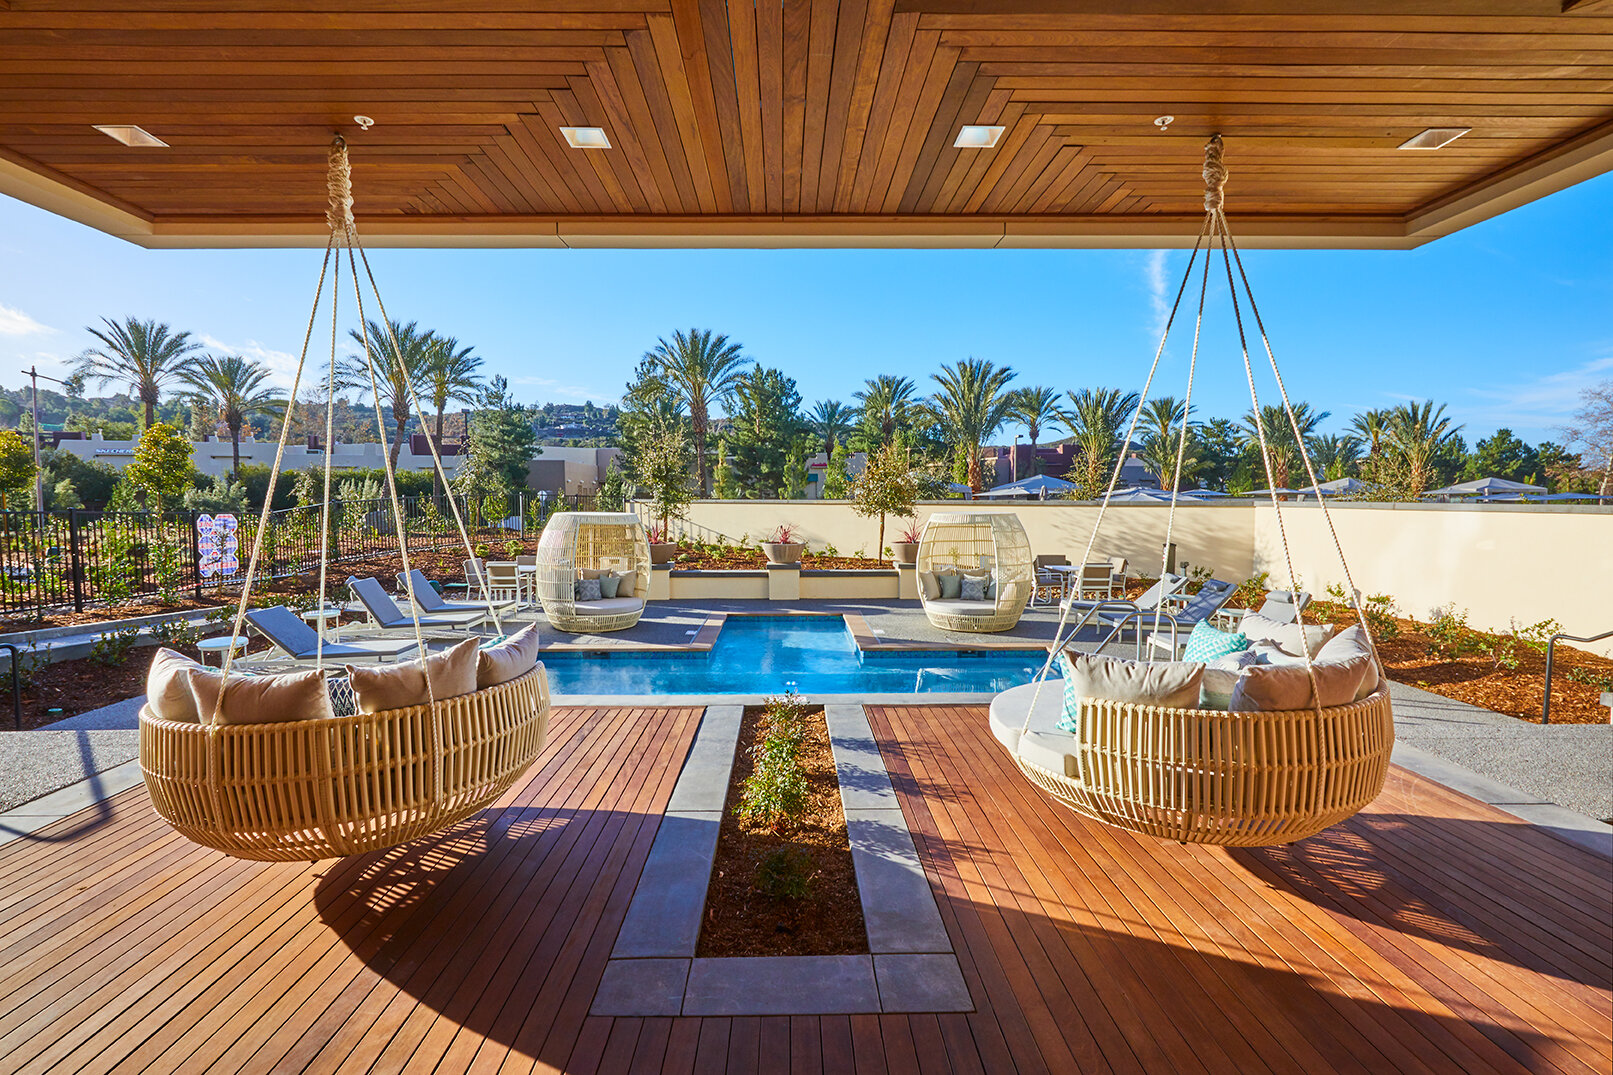 Luxury Getaway - Viejas Resort and Casino — SDFoodies